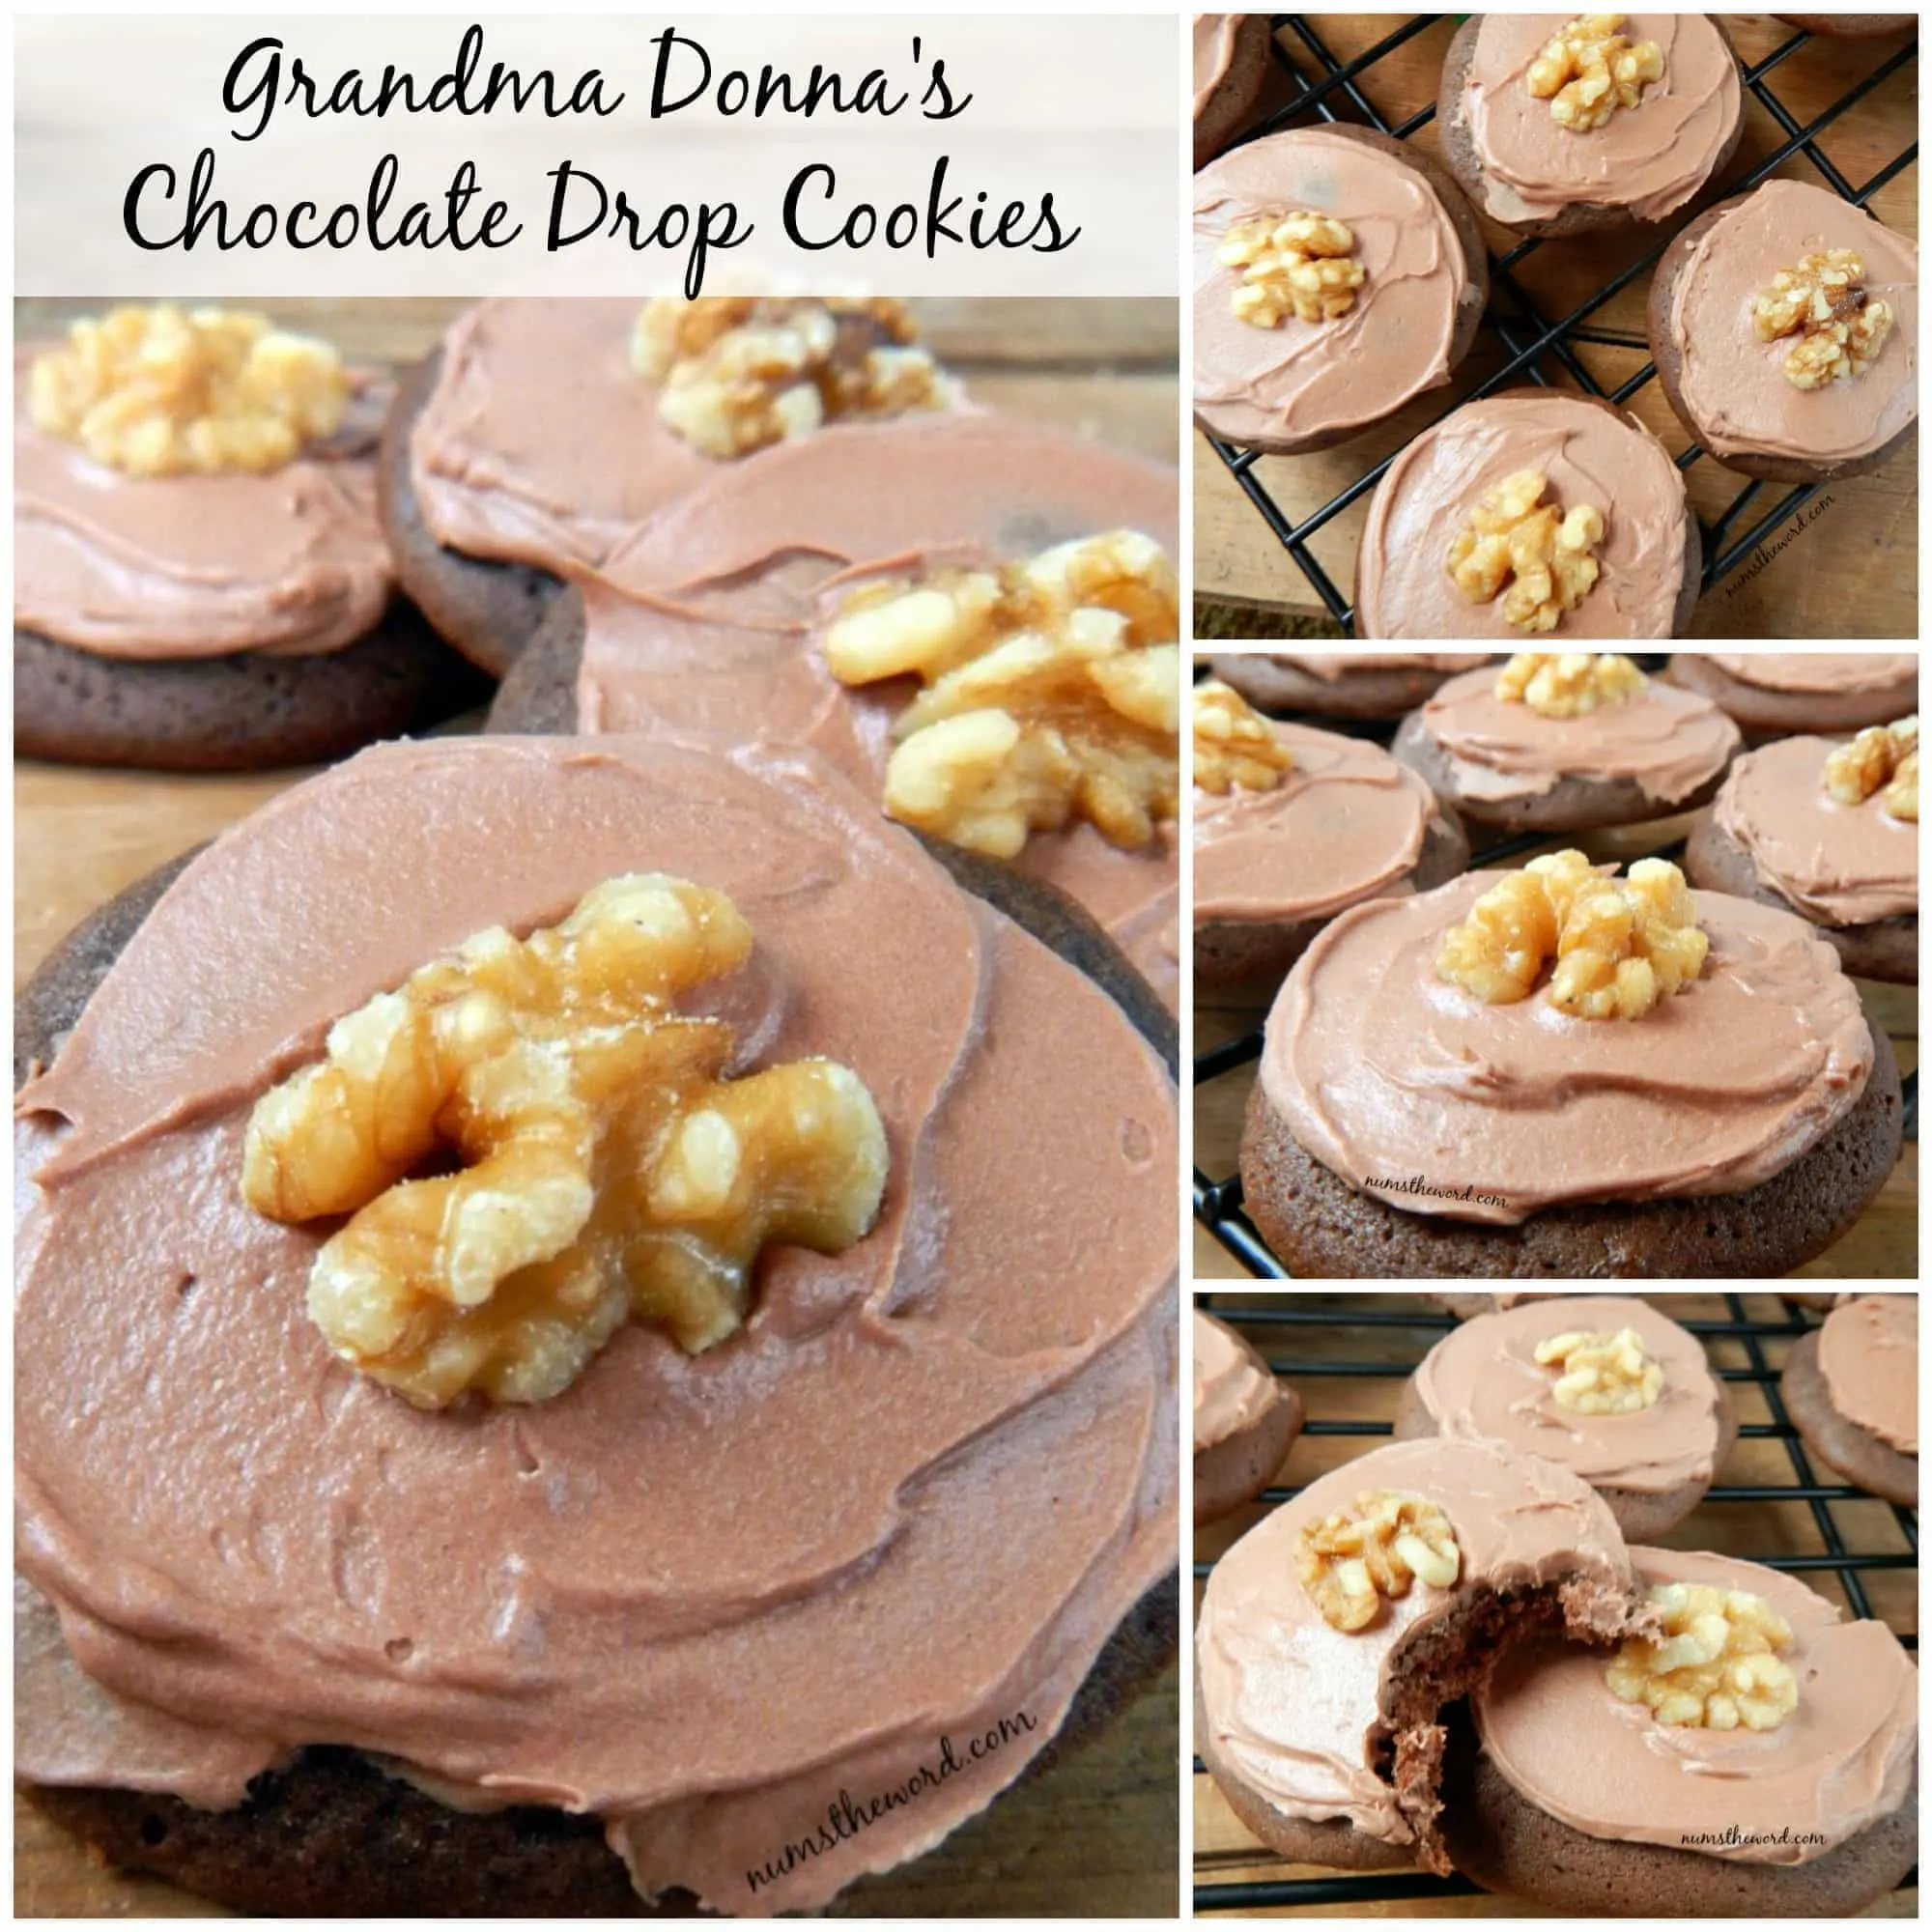 Grandma Donna's Chocolate Drop Cookies